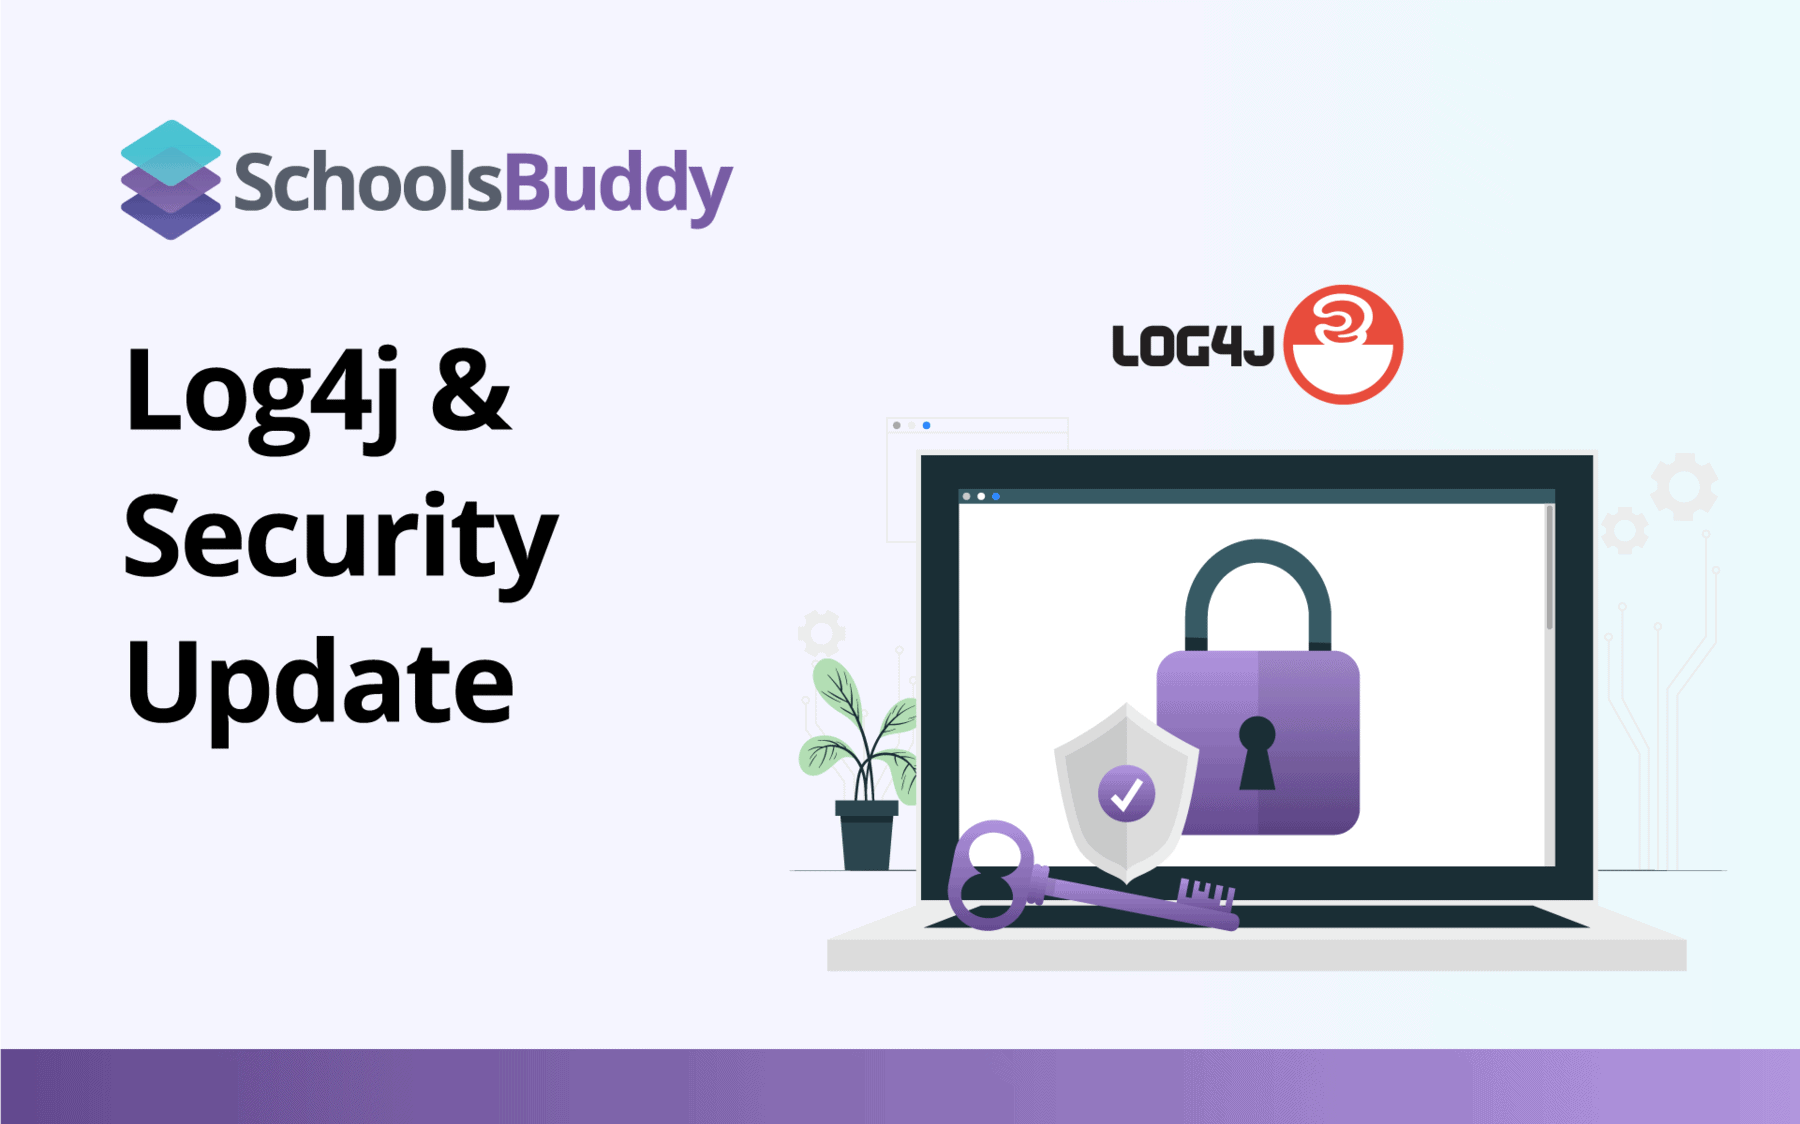 SB Log4j security update